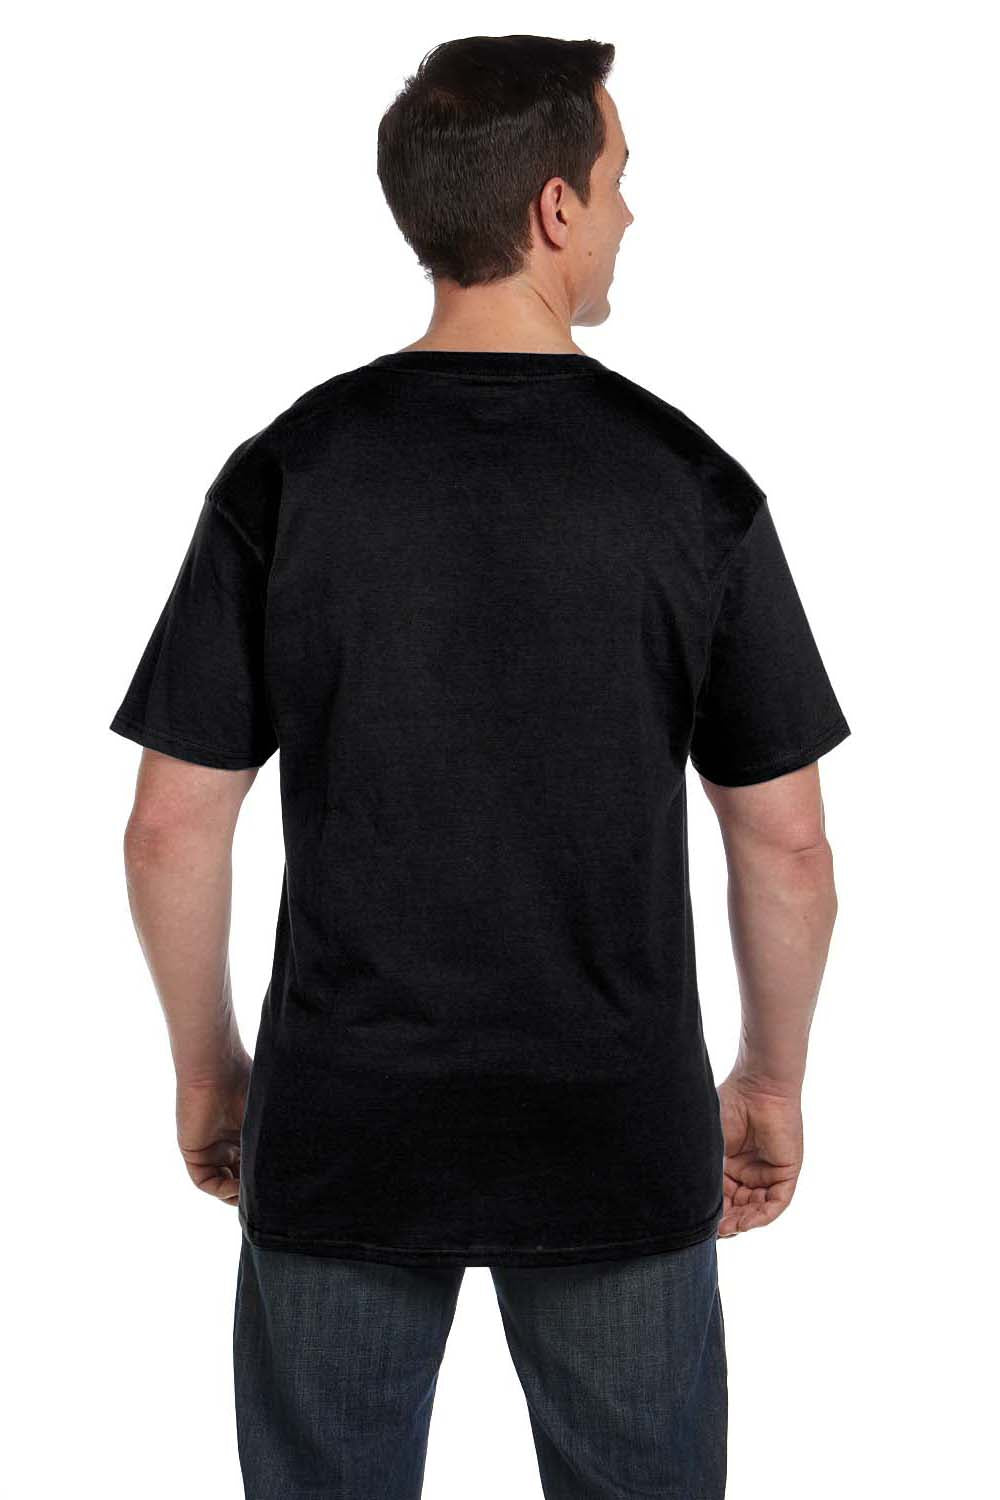 Hanes 5190P Mens Beefy-T Short Sleeve Crewneck T-Shirt w/ Pocket Black Back